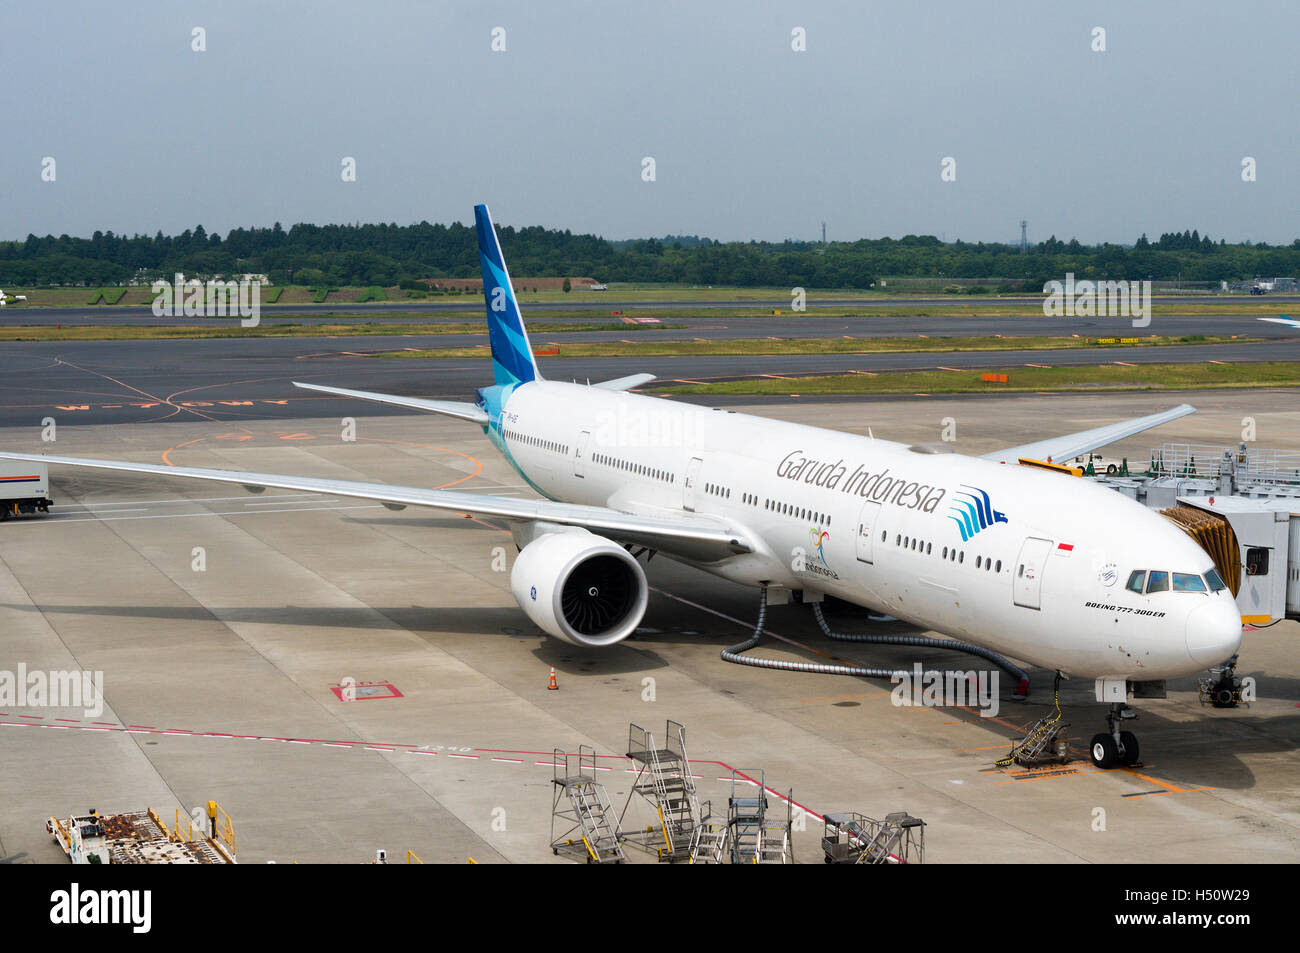 Tokyo, Japan - June 15, 2015: A Garuda Indonesia plane being serviced on the tarmac of Tokyo Narita Airport. Stock Photo